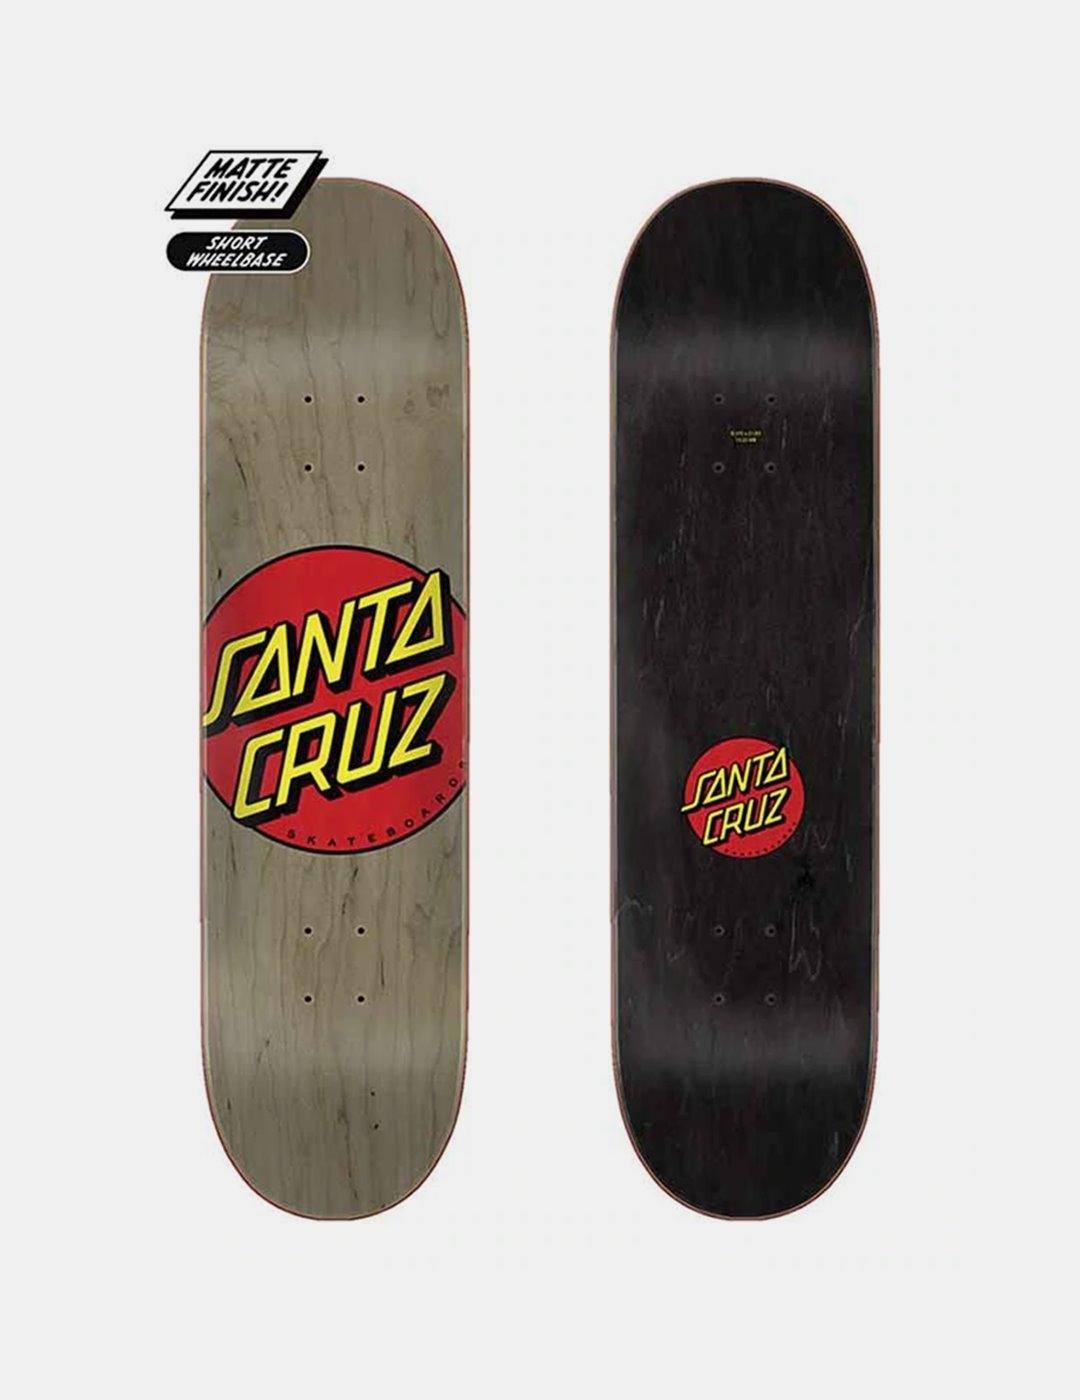 Tabla Skate Santa Cruz Classic Dot 8.375x31.83